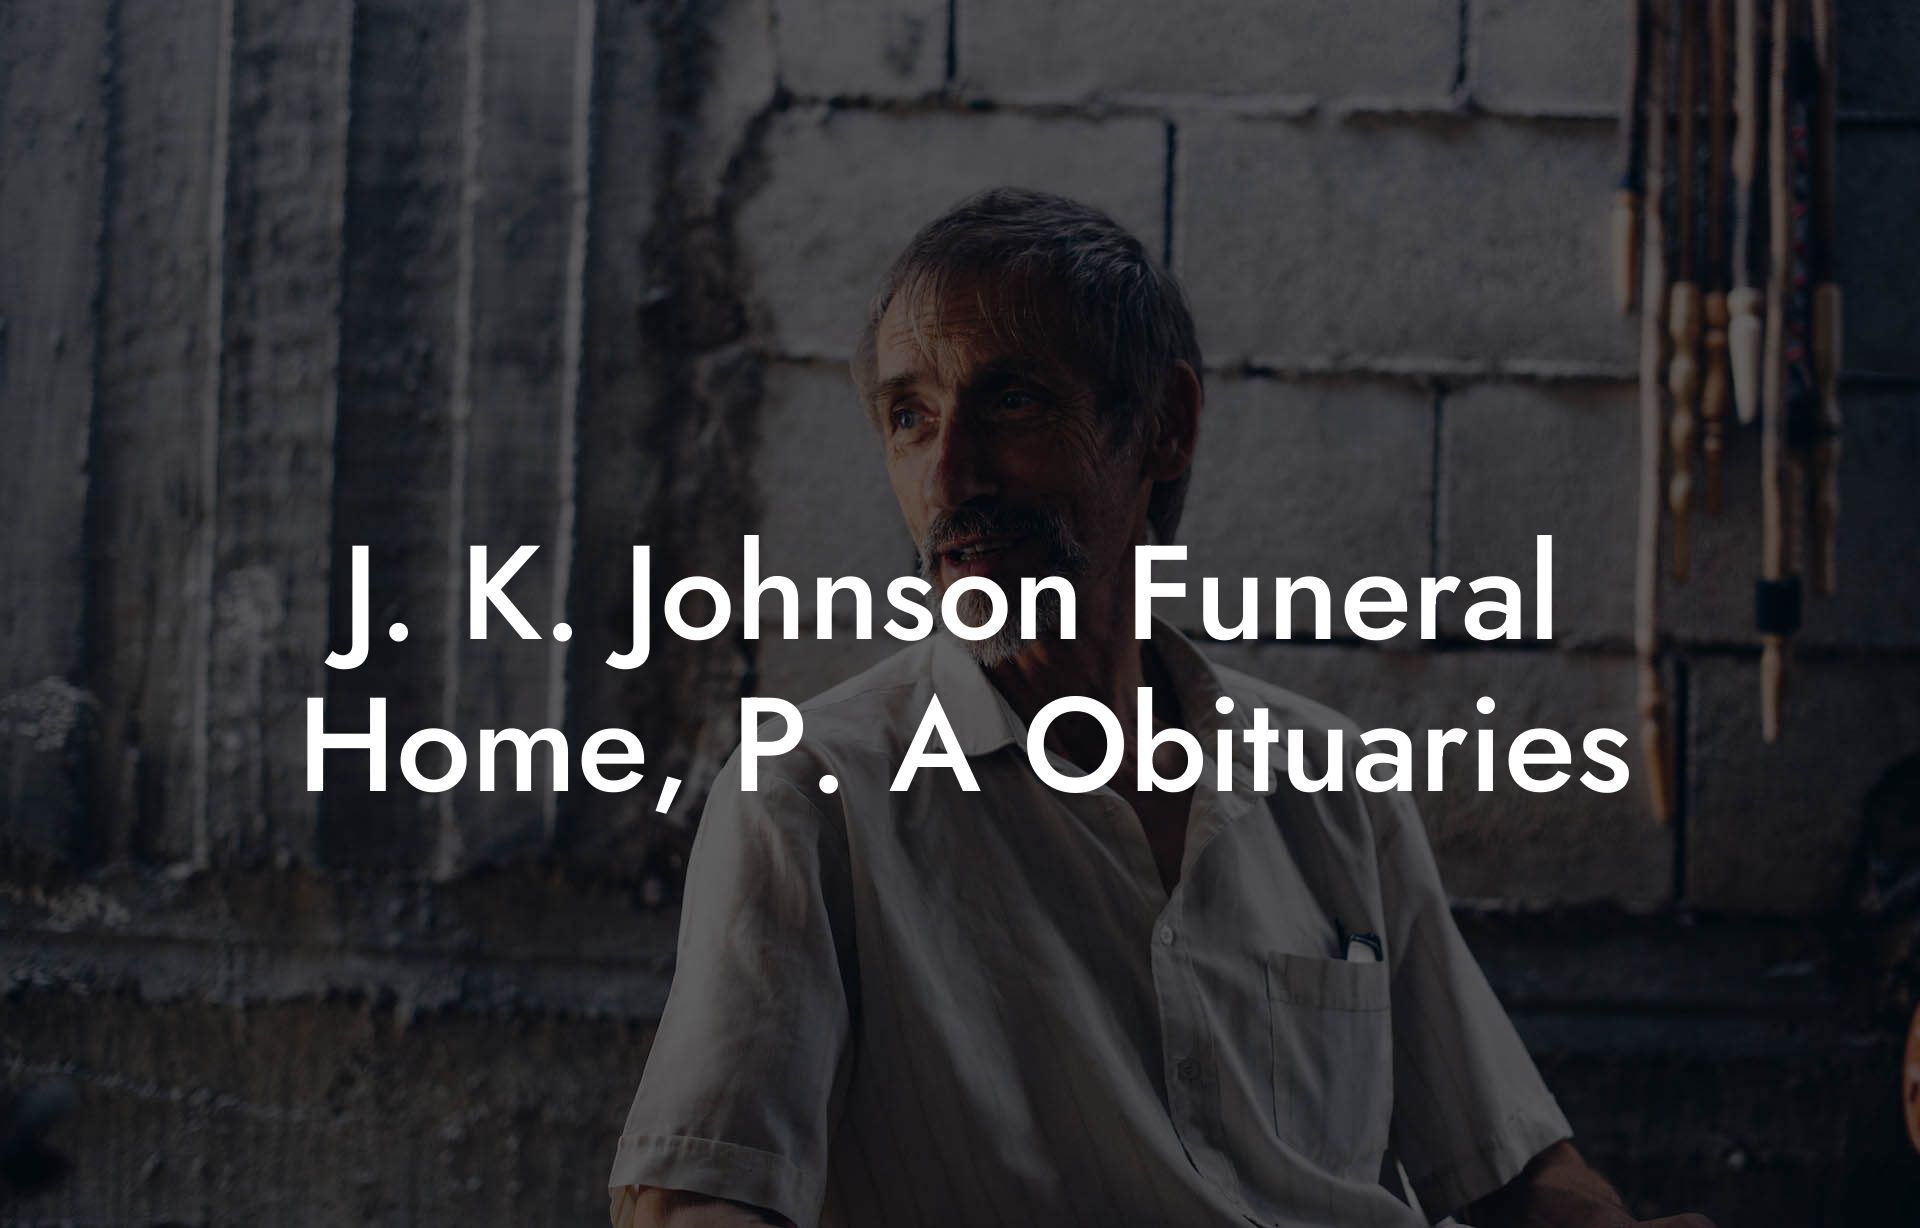 J. K. Johnson Funeral Home, P. A Obituaries